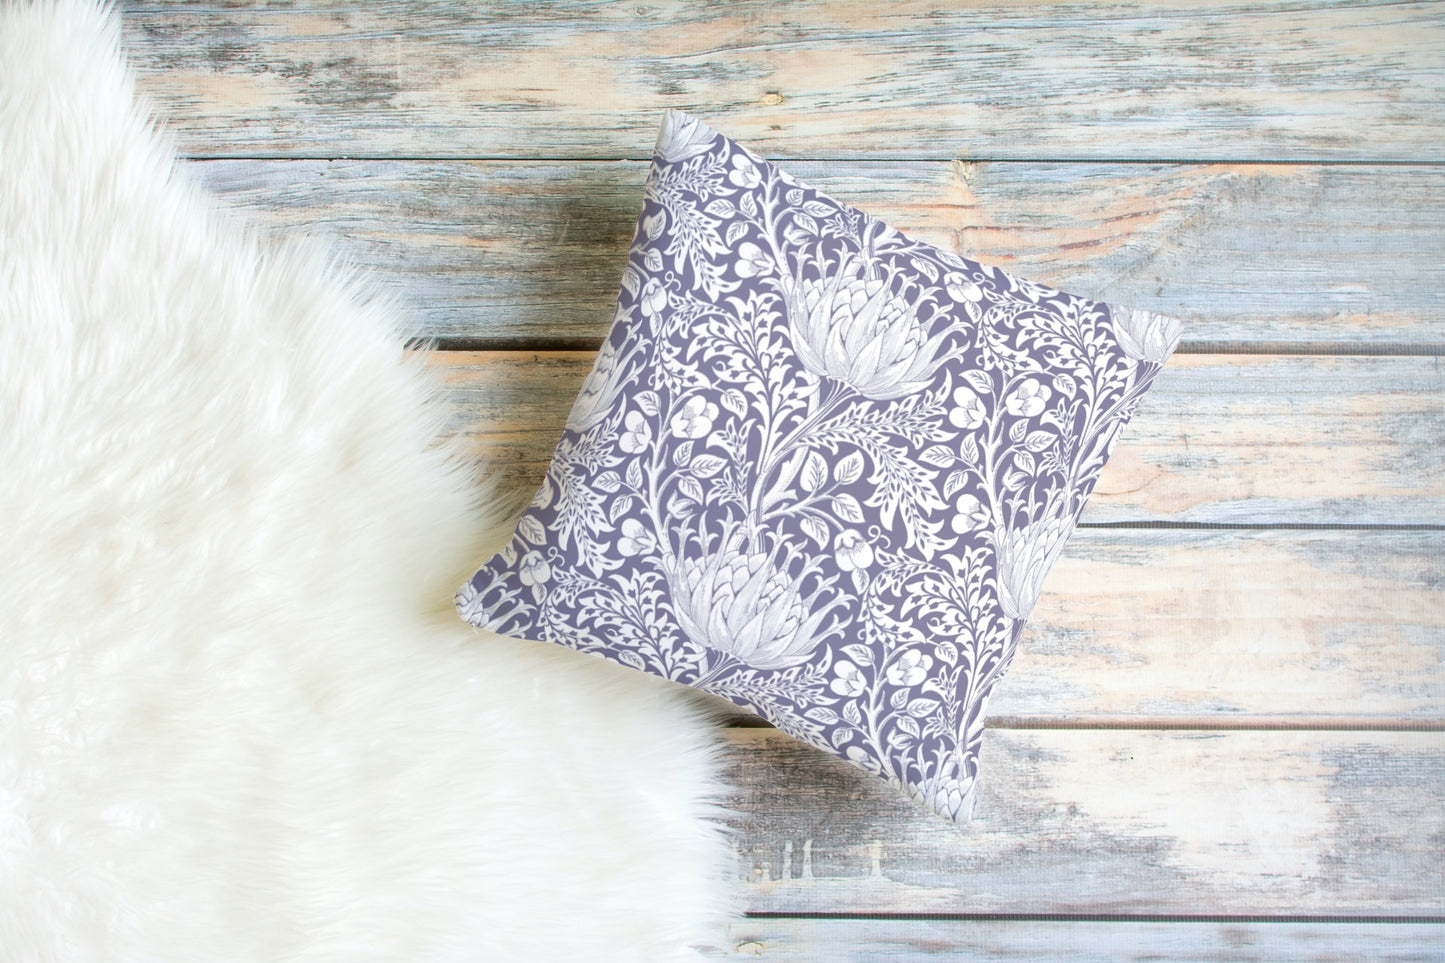 Artichoke Cotton Throw Pillows William Morris Heather Purple